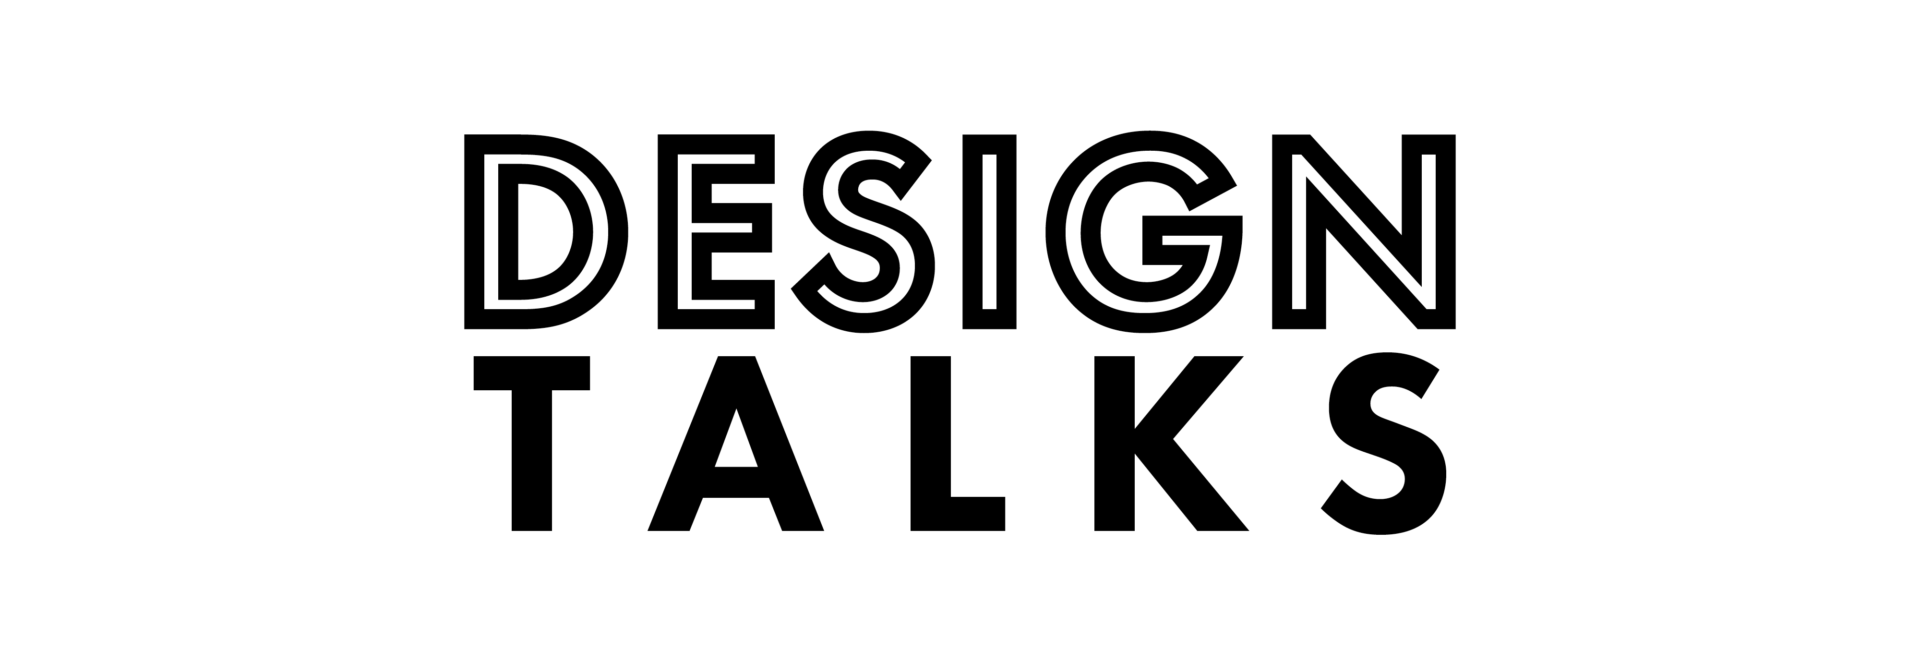 Austin Foundation for Architecture - Design Talks